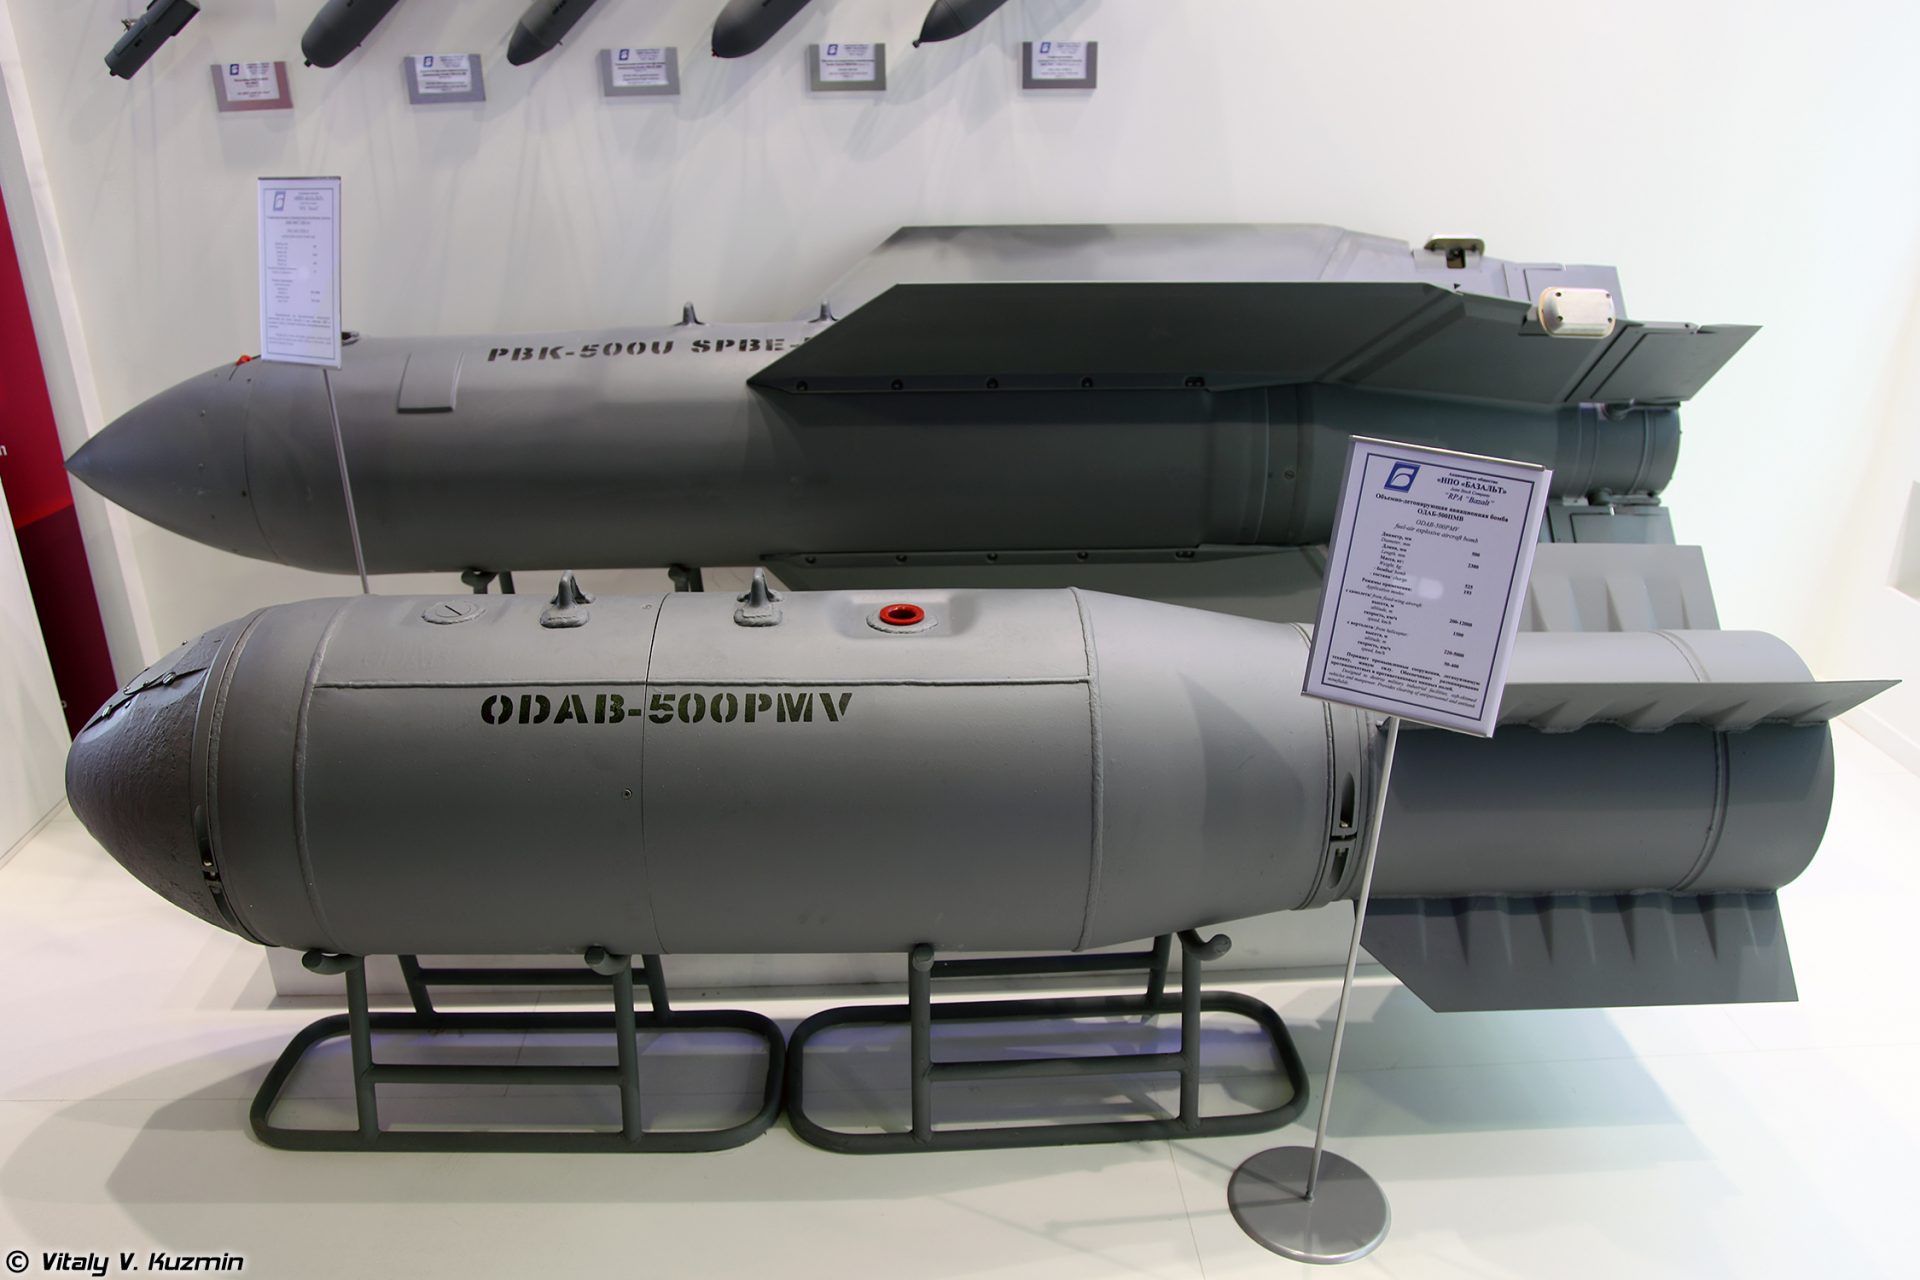 The PBK-500U SPBE-K Drel 